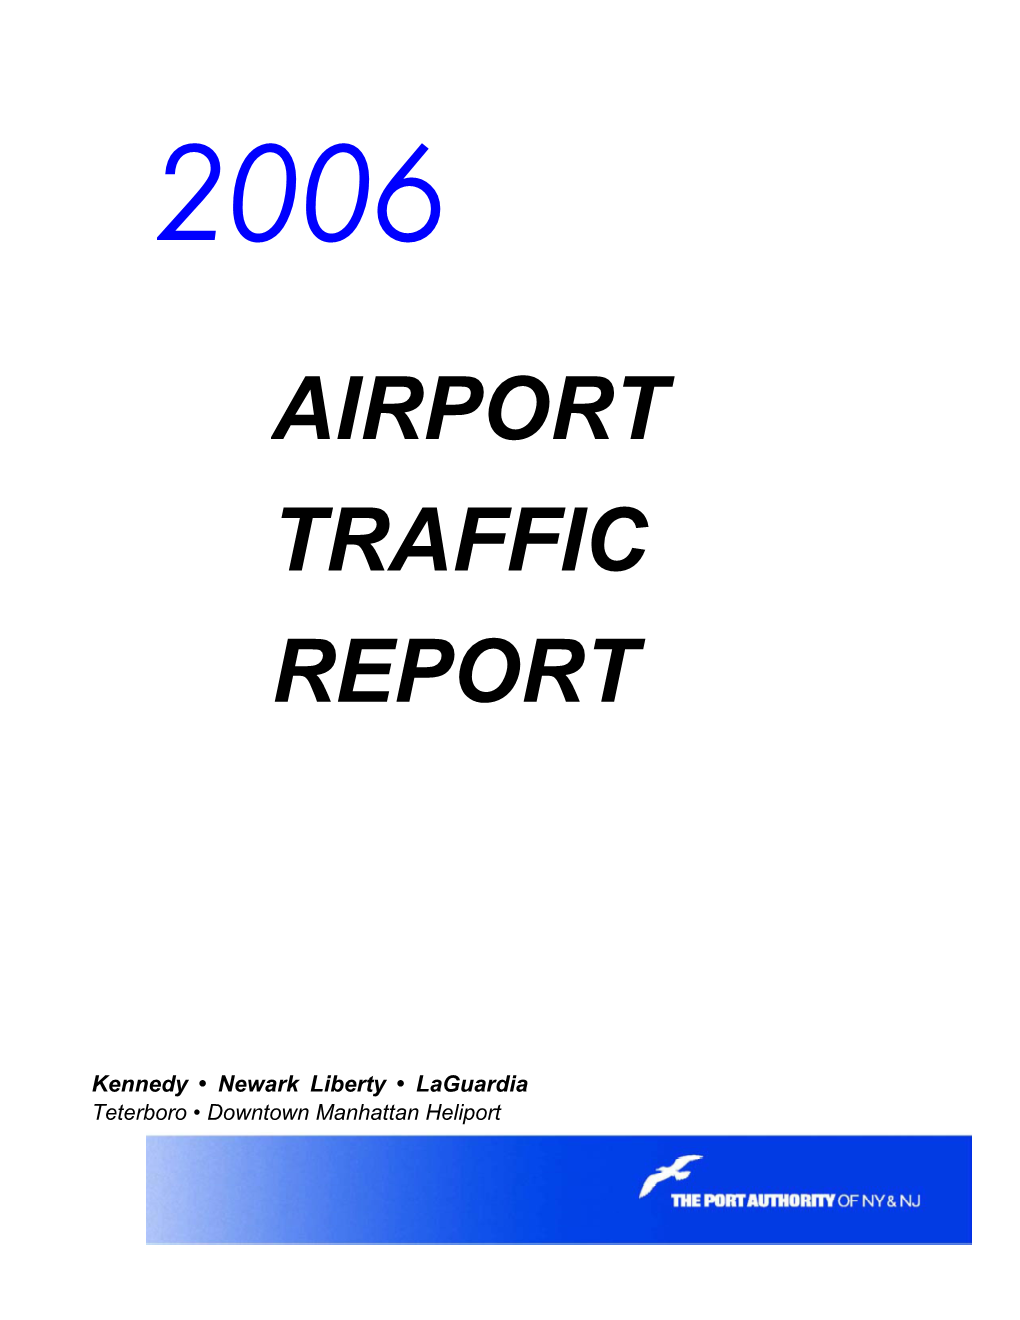 2006 Annual Airport Traffic Report